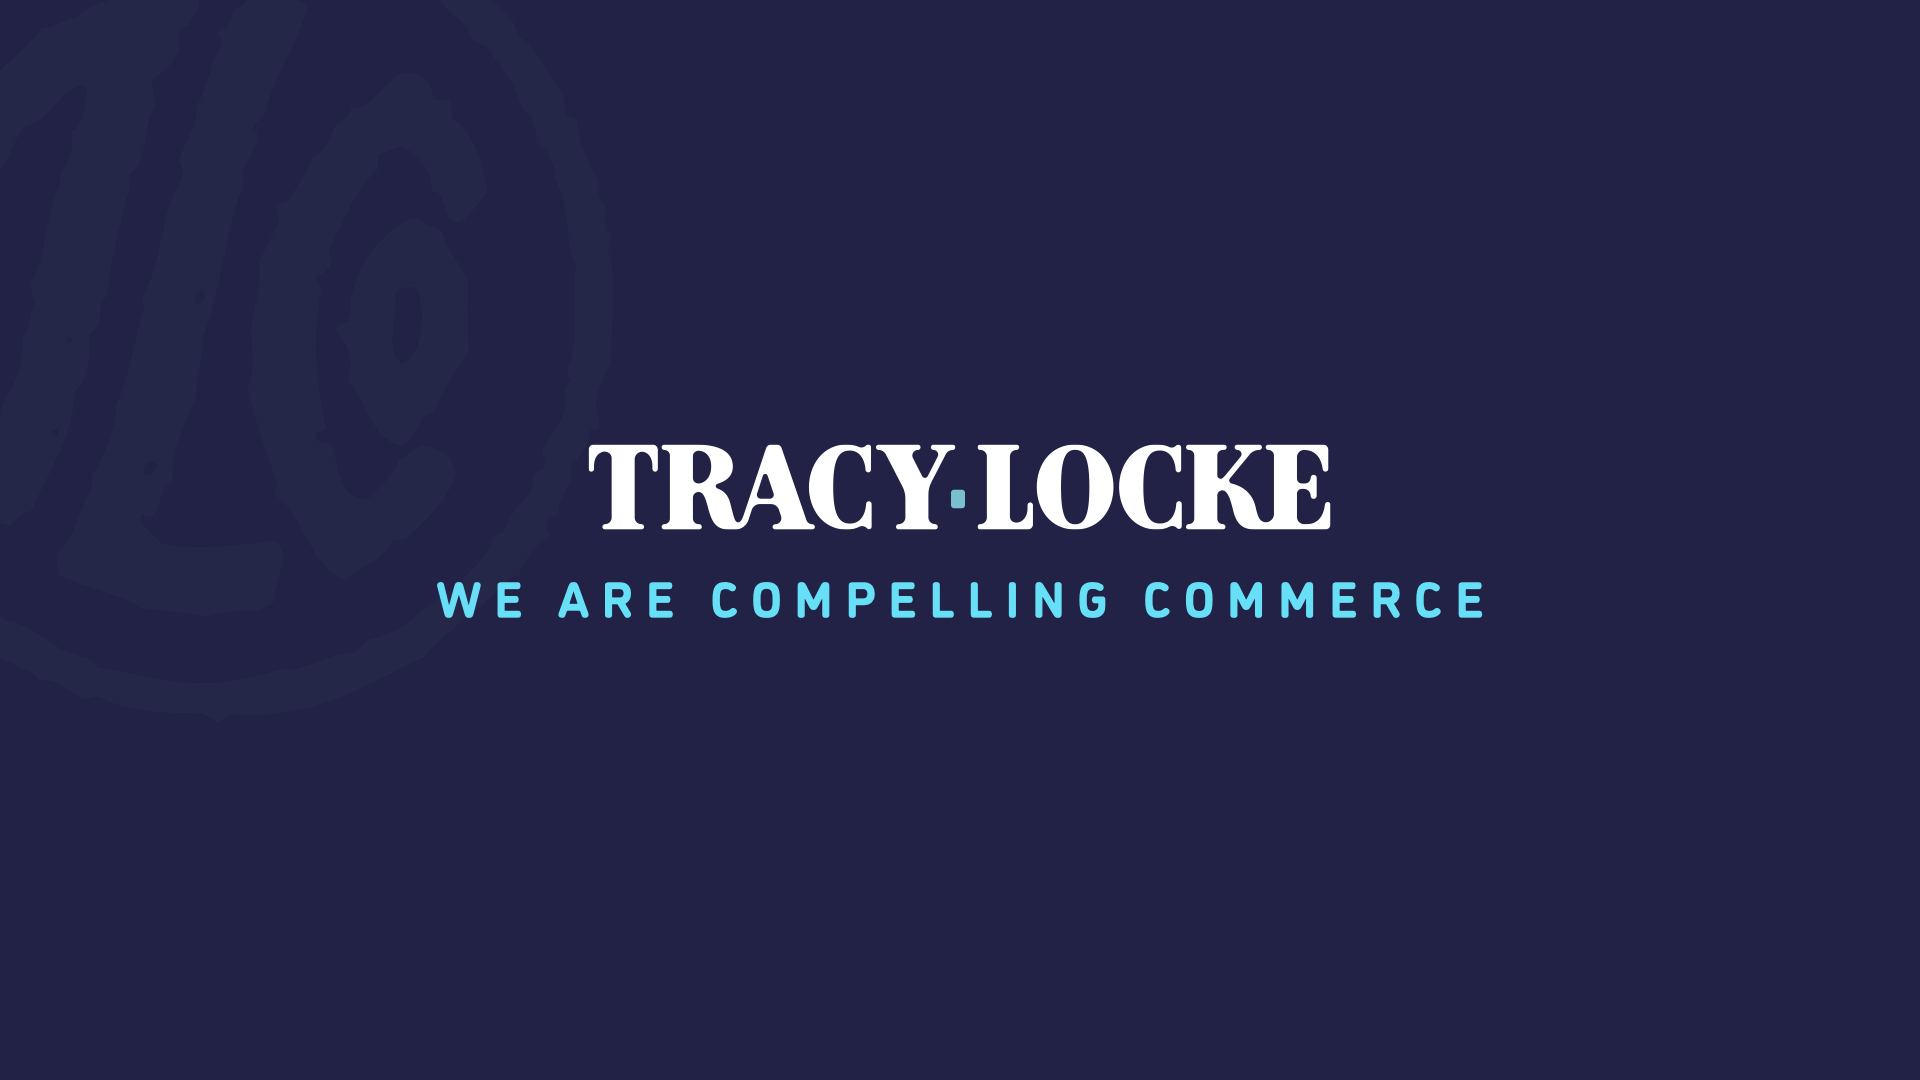 Tracy-Locke Launches Rebrand